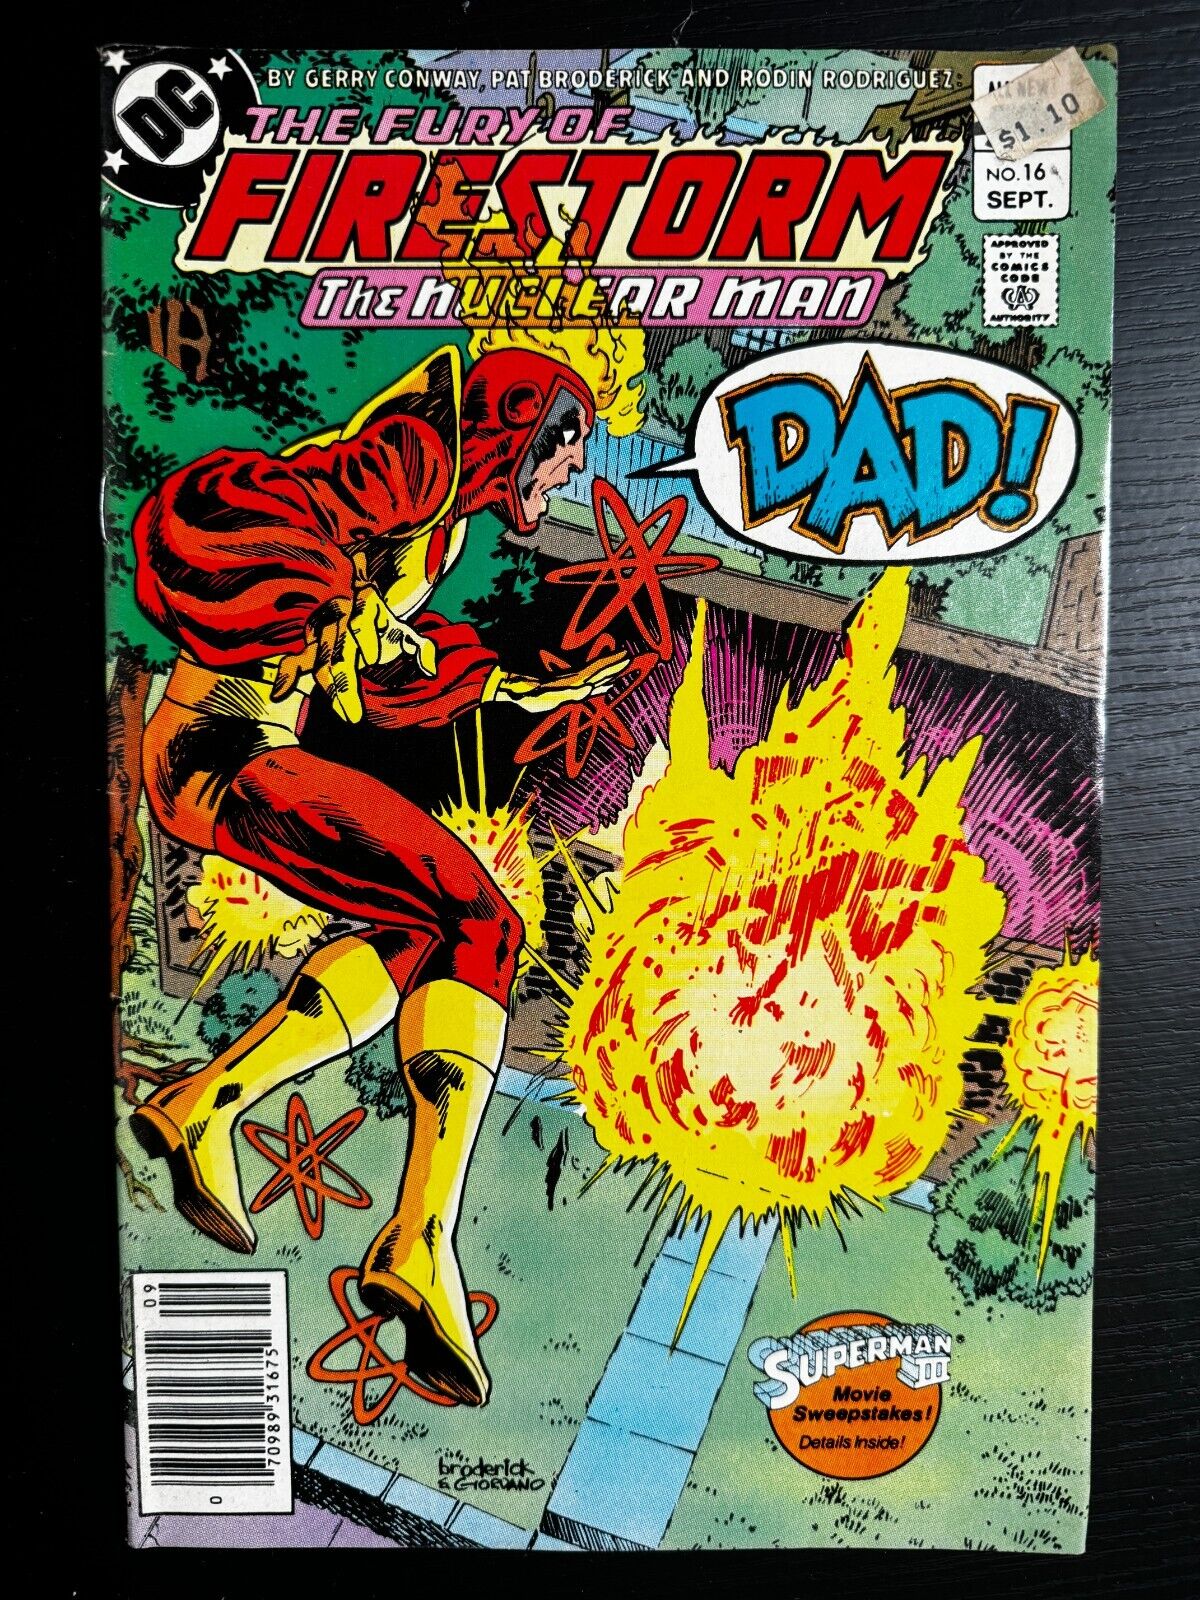 The Fury of Firestorm #16 (DC Comics, September 1983)